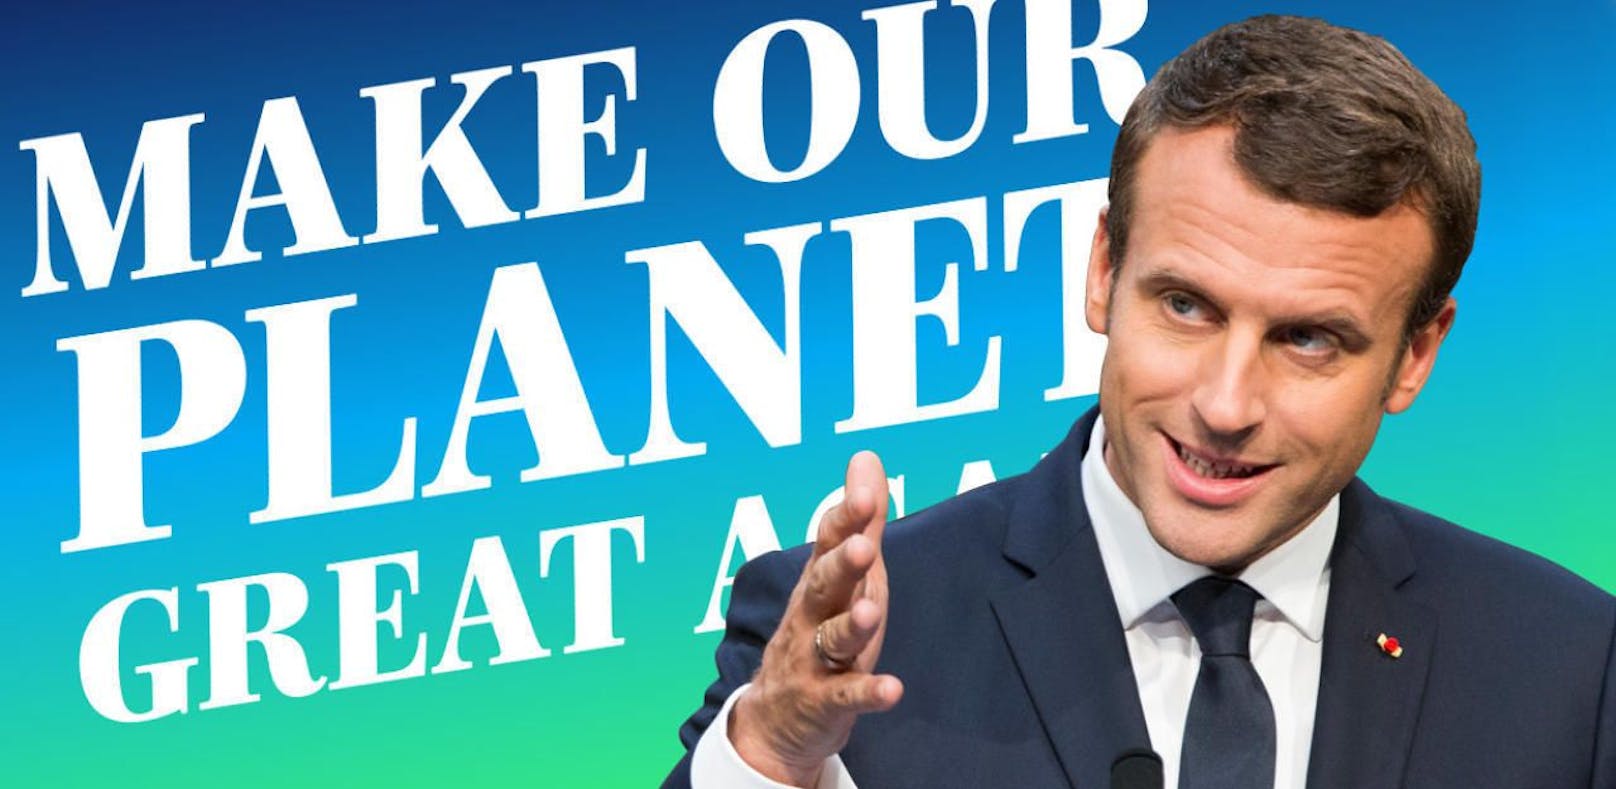 Mit Donald Trumps eigenem Wahlkampf-Slogan nimmt Macron den Kampf gegen den Klimawandel auf.